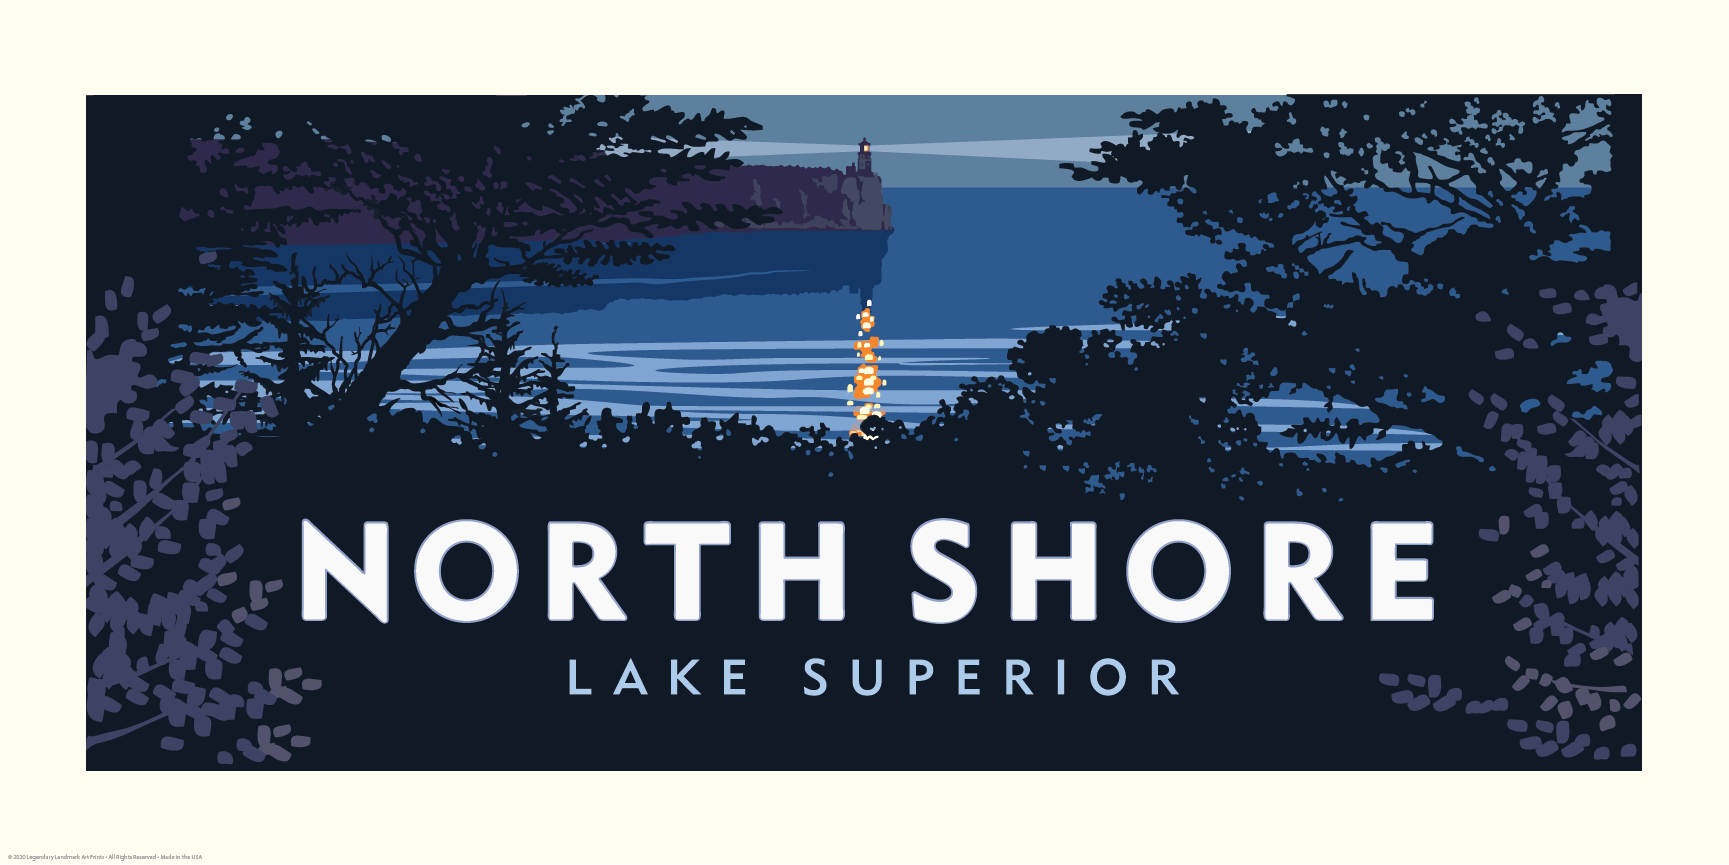 Landmark MN | North Shore Lake Superior